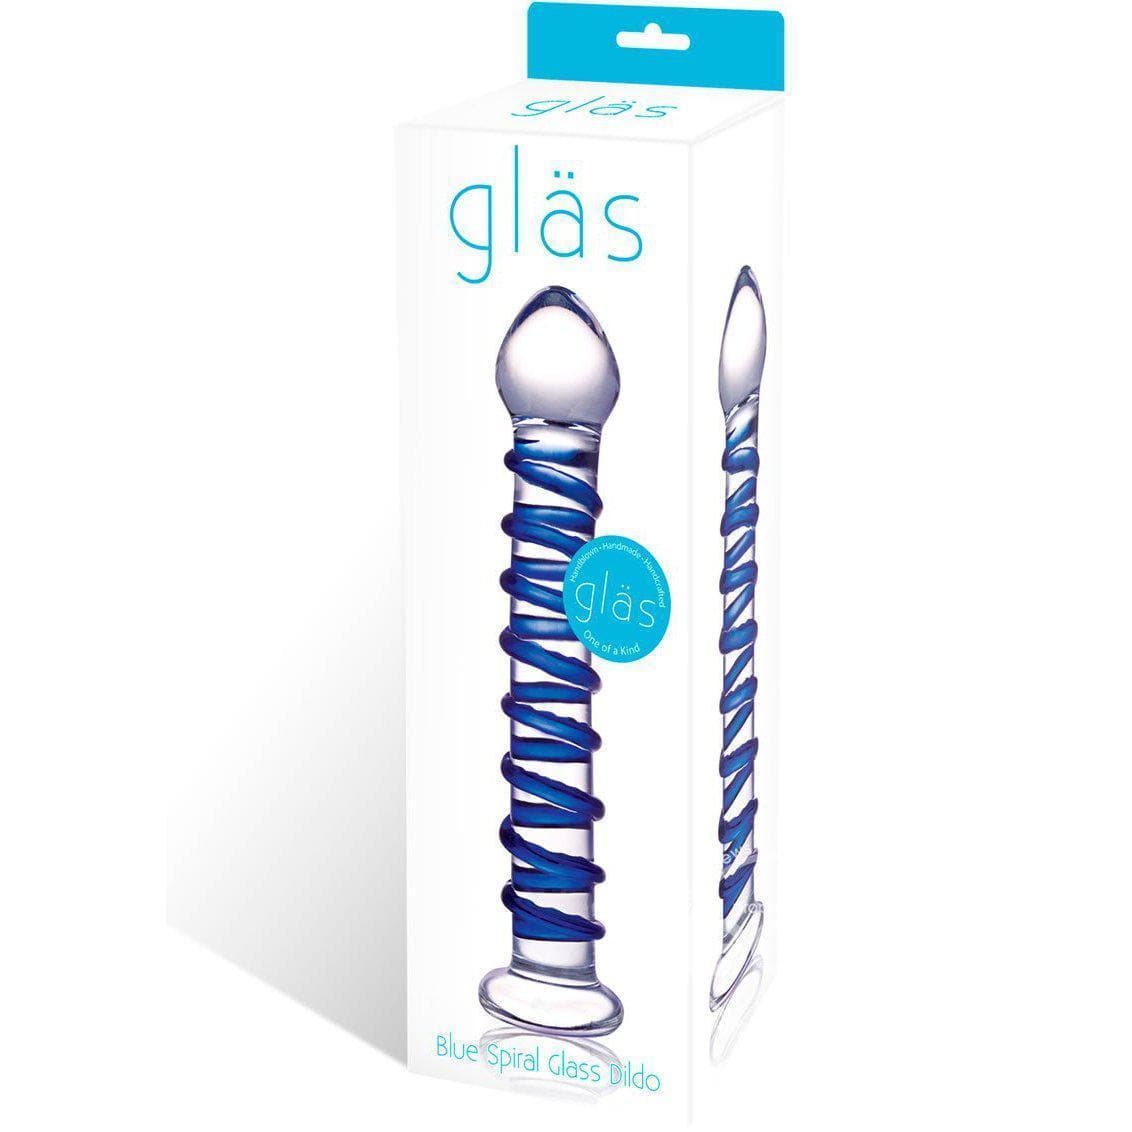 Glas Blue Spiral Glass Dildo - Romantic Blessings